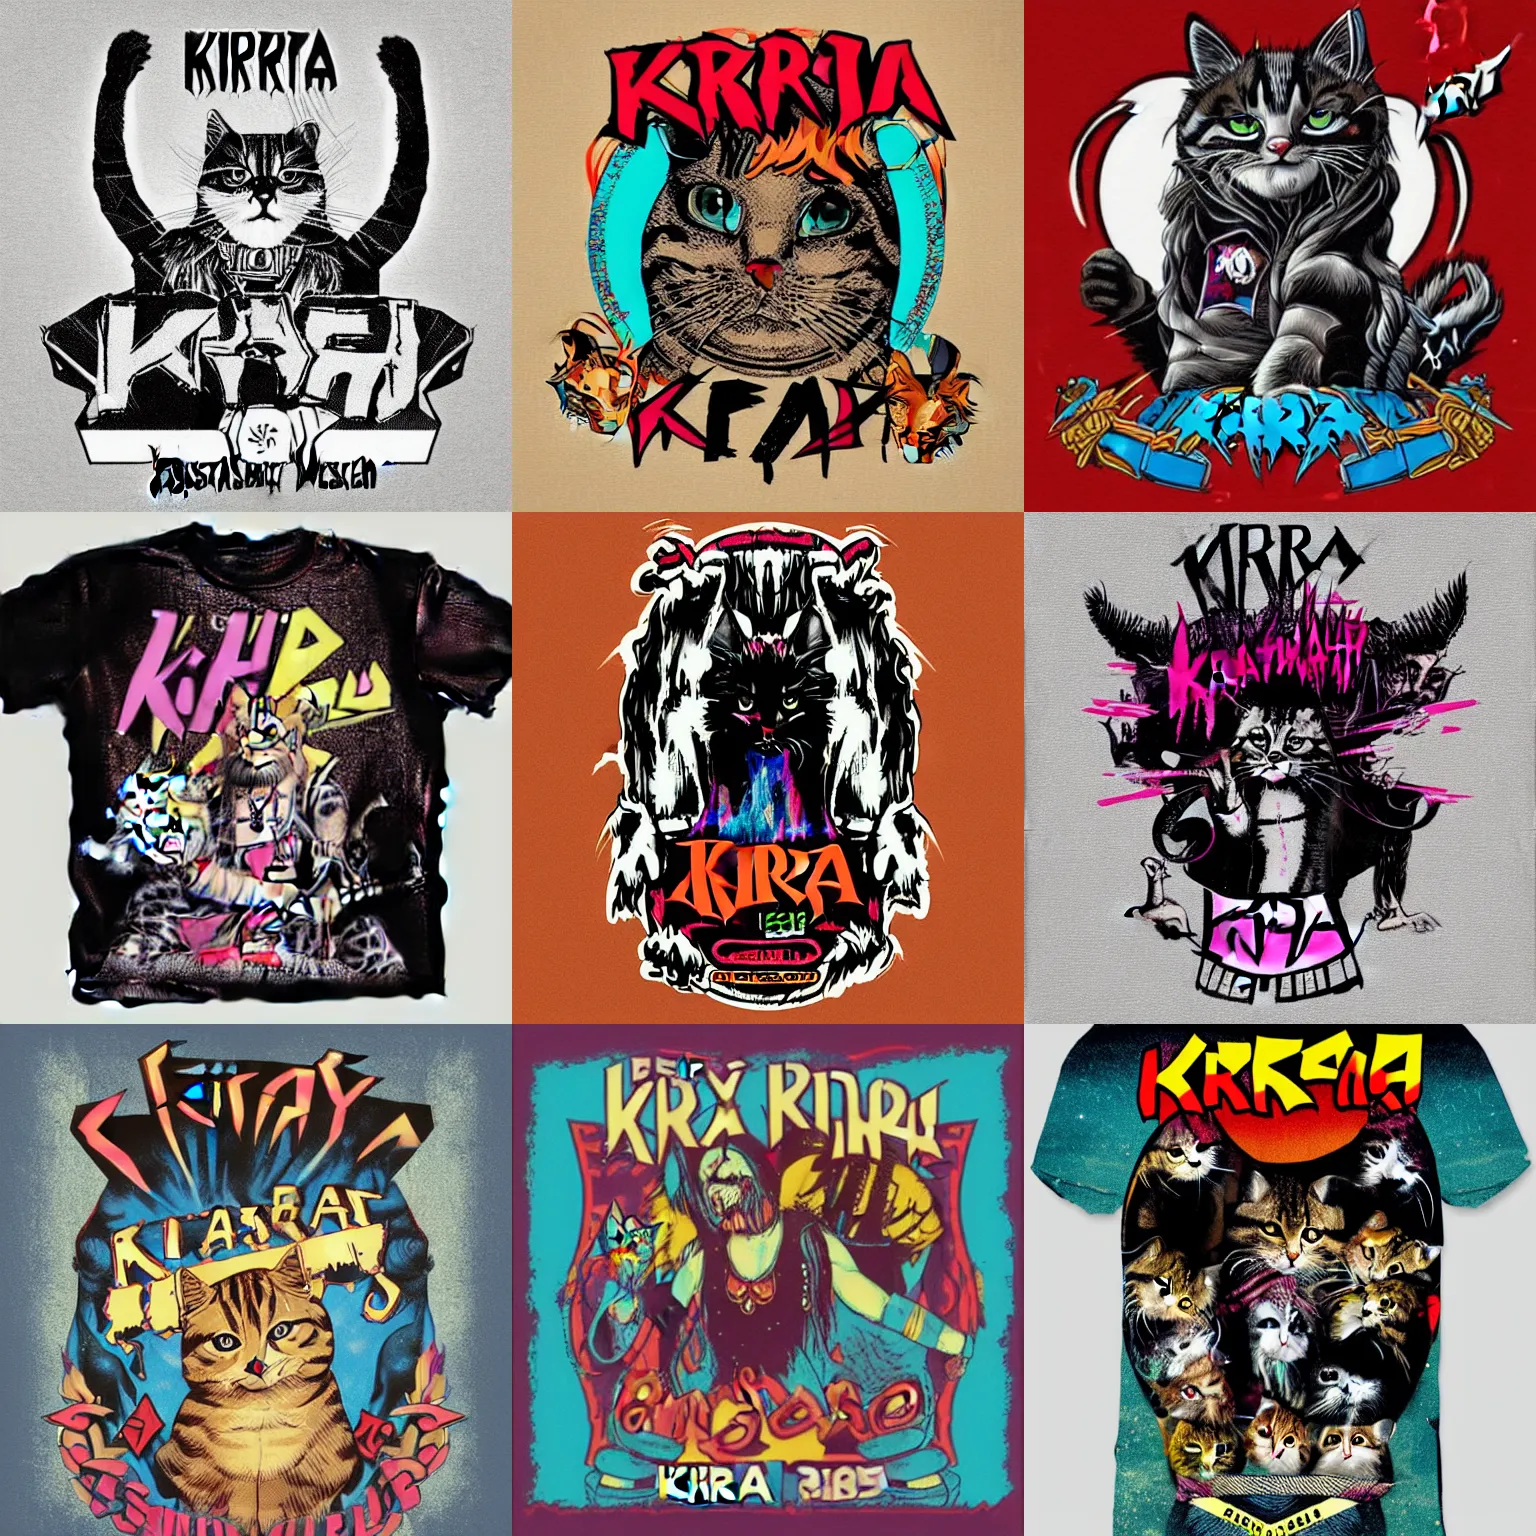 Prompt: 80s concert T-shirt design for heavy metal band “Kira” featuring tabby cat “Kira”, masterpiece, trending on artstation